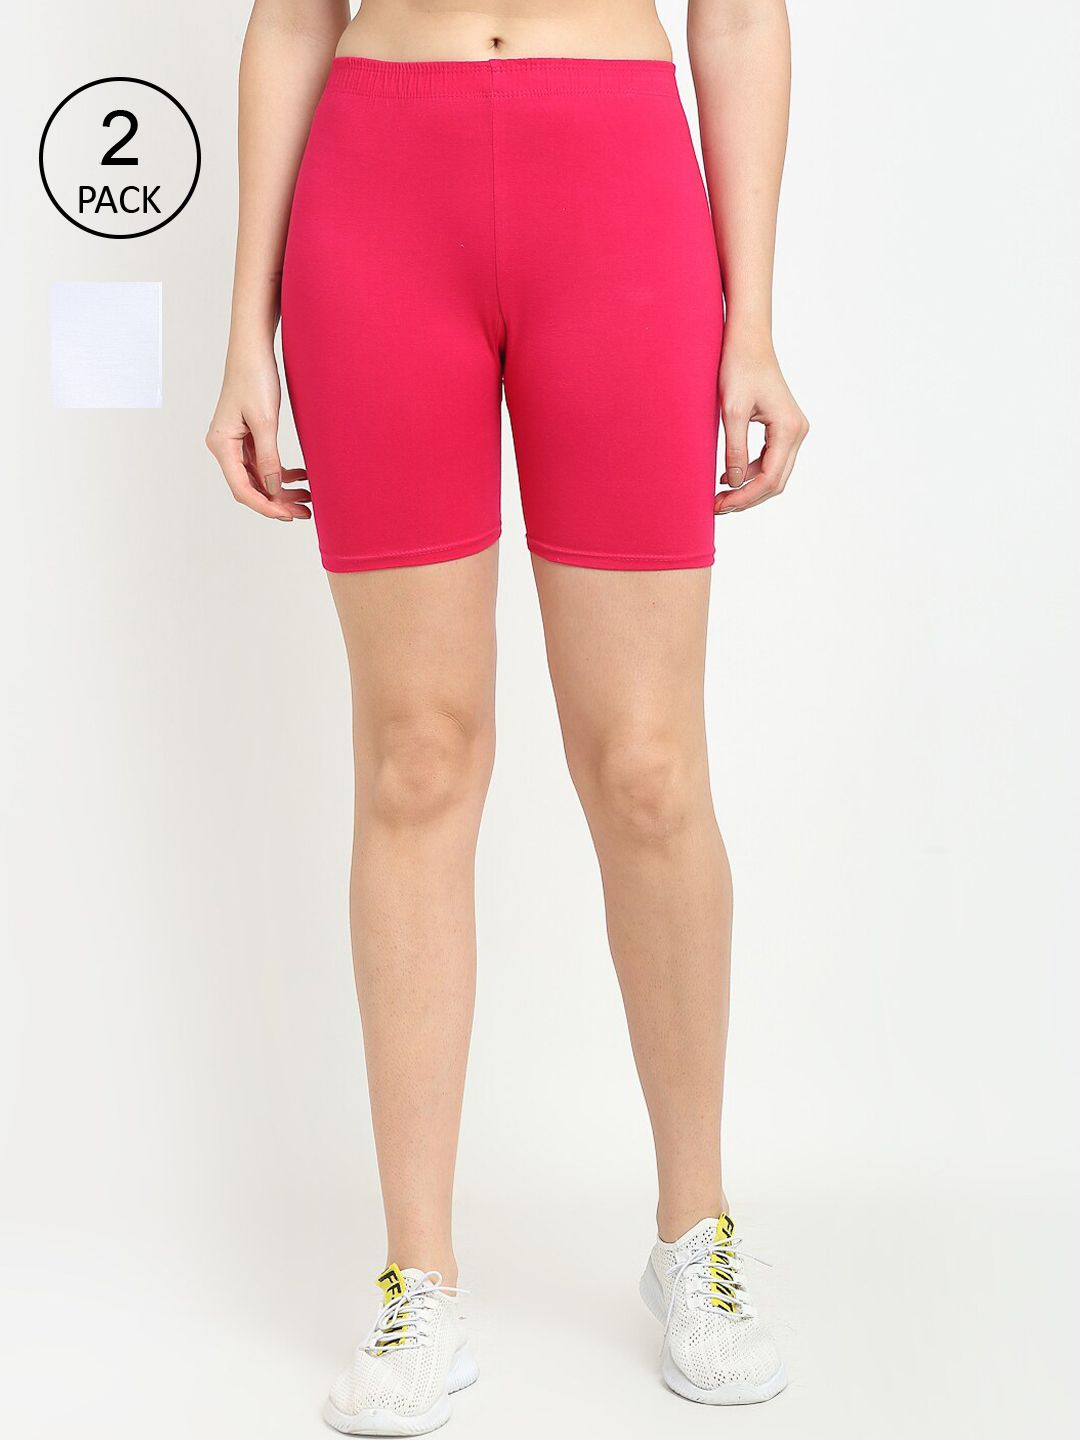 GRACIT Women Pack of 2 White & Pink Biker Shorts Price in India